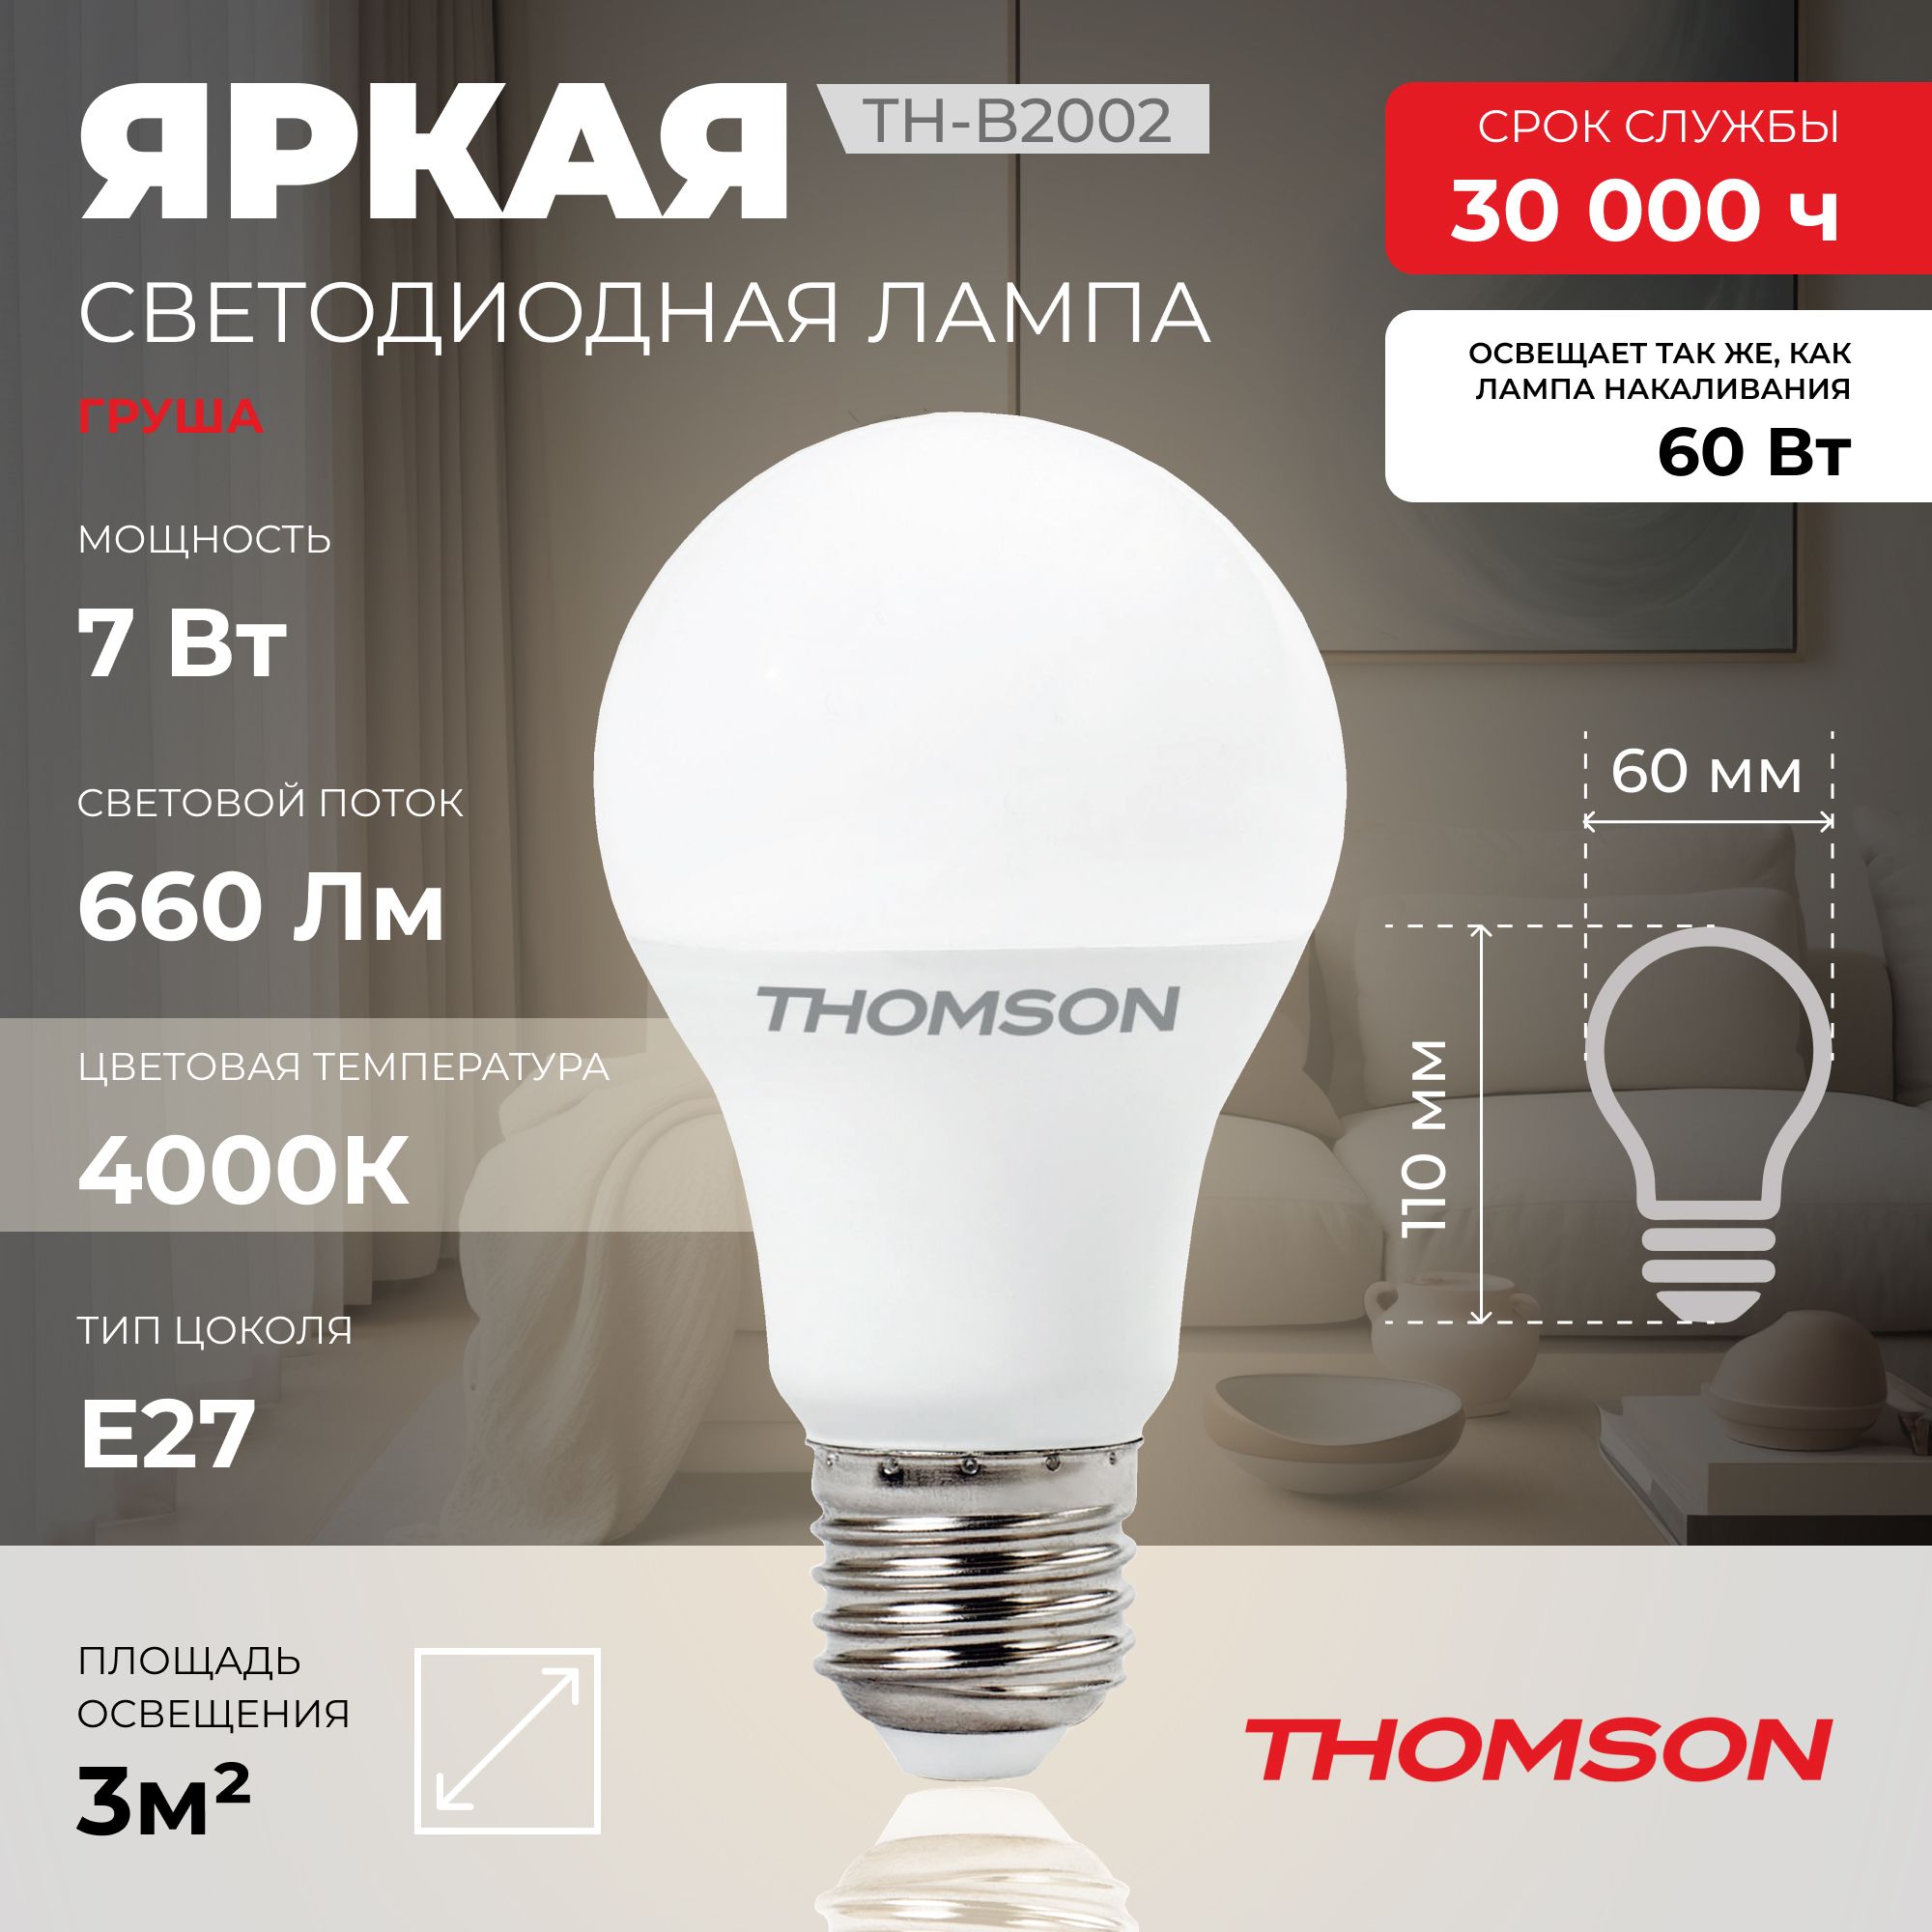 Лампочка светодиодная THOMSON TH-B2002 7 Вт, E27, А60, груша, 4000K нейтральный белый свет